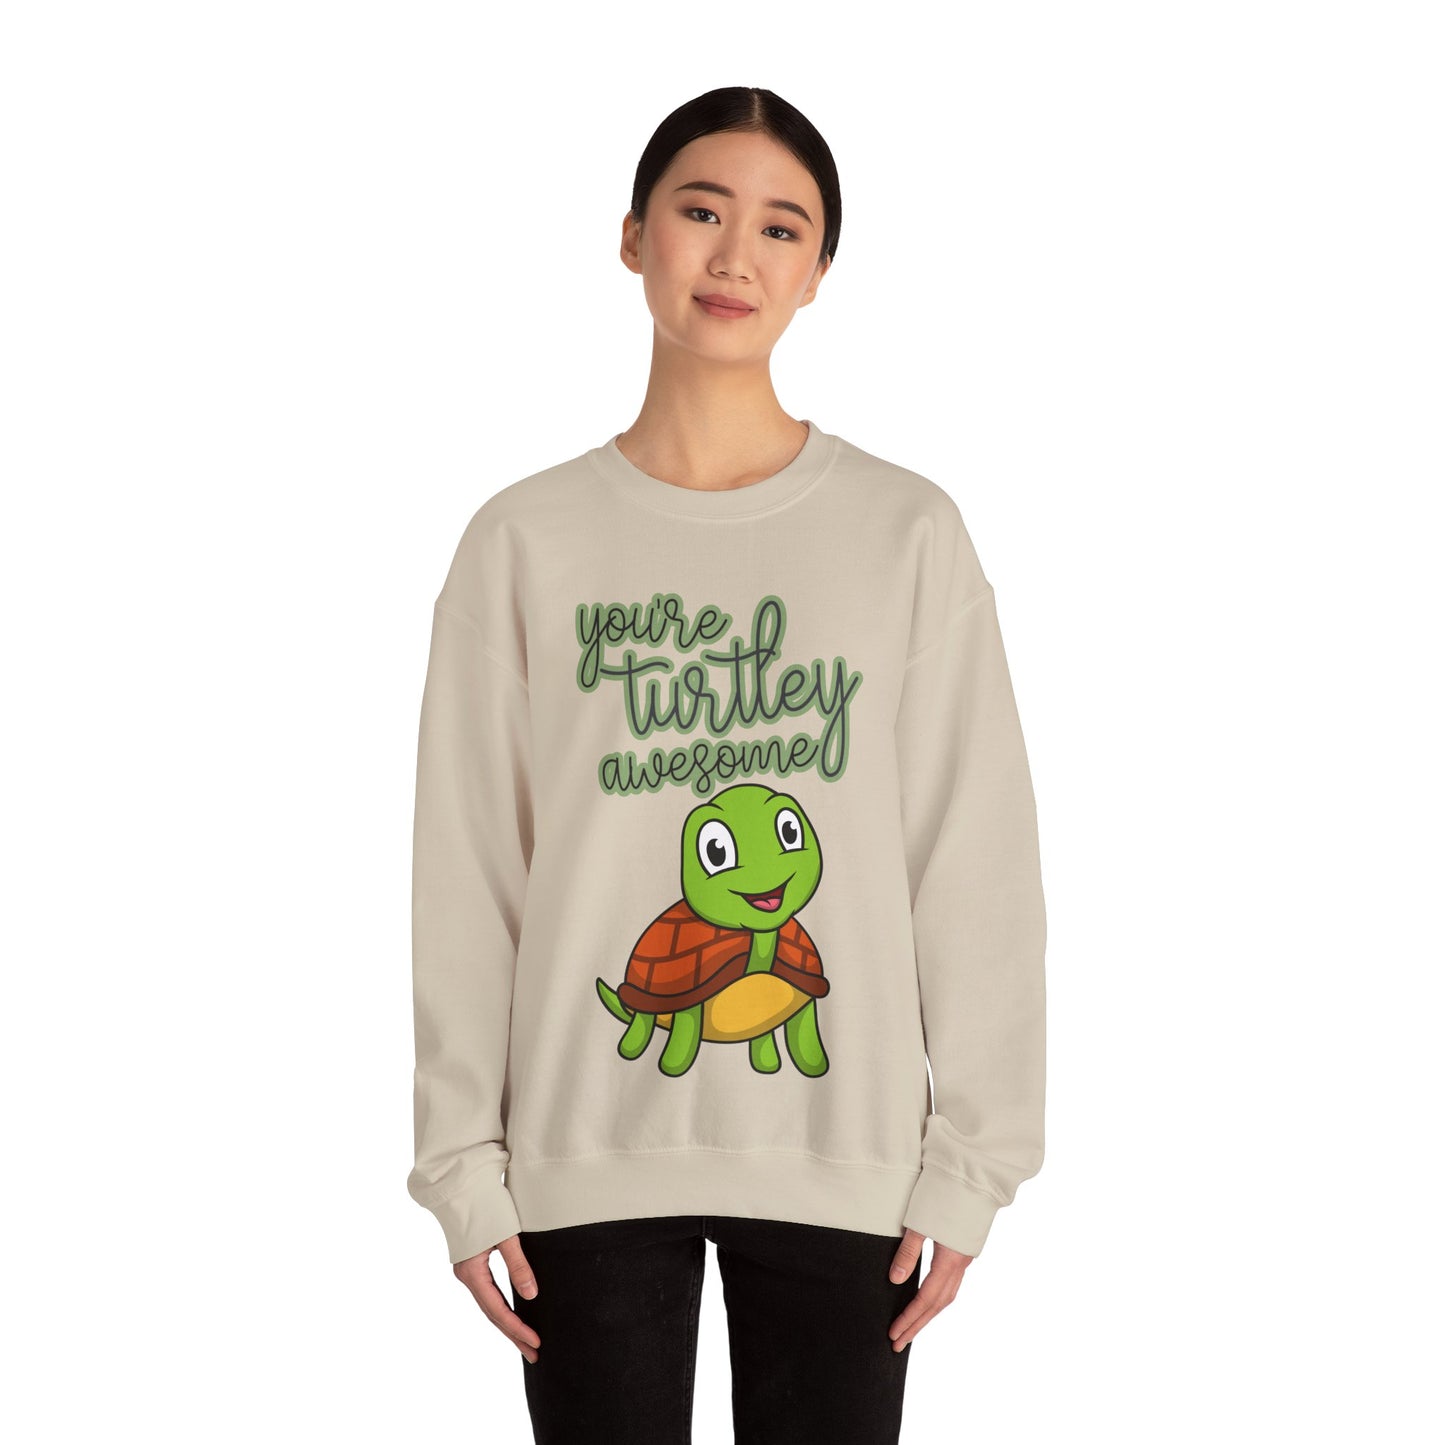 You're Turtley Awesome Sweatshirt